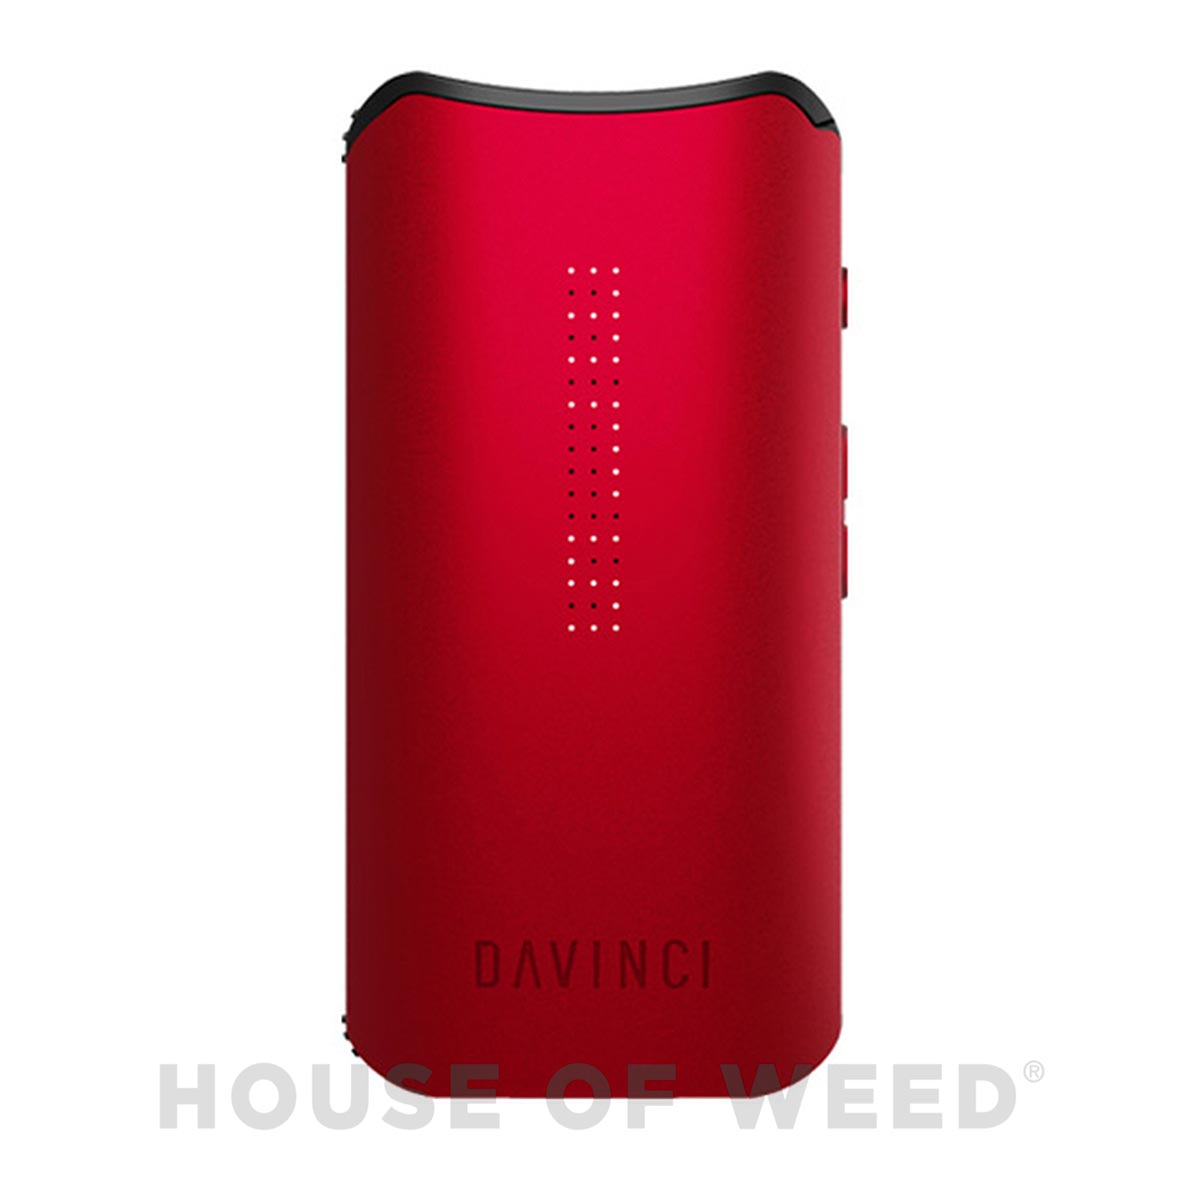 Vaporizador DaVinci IQC color rojo encendido con marca de agua House of Weed